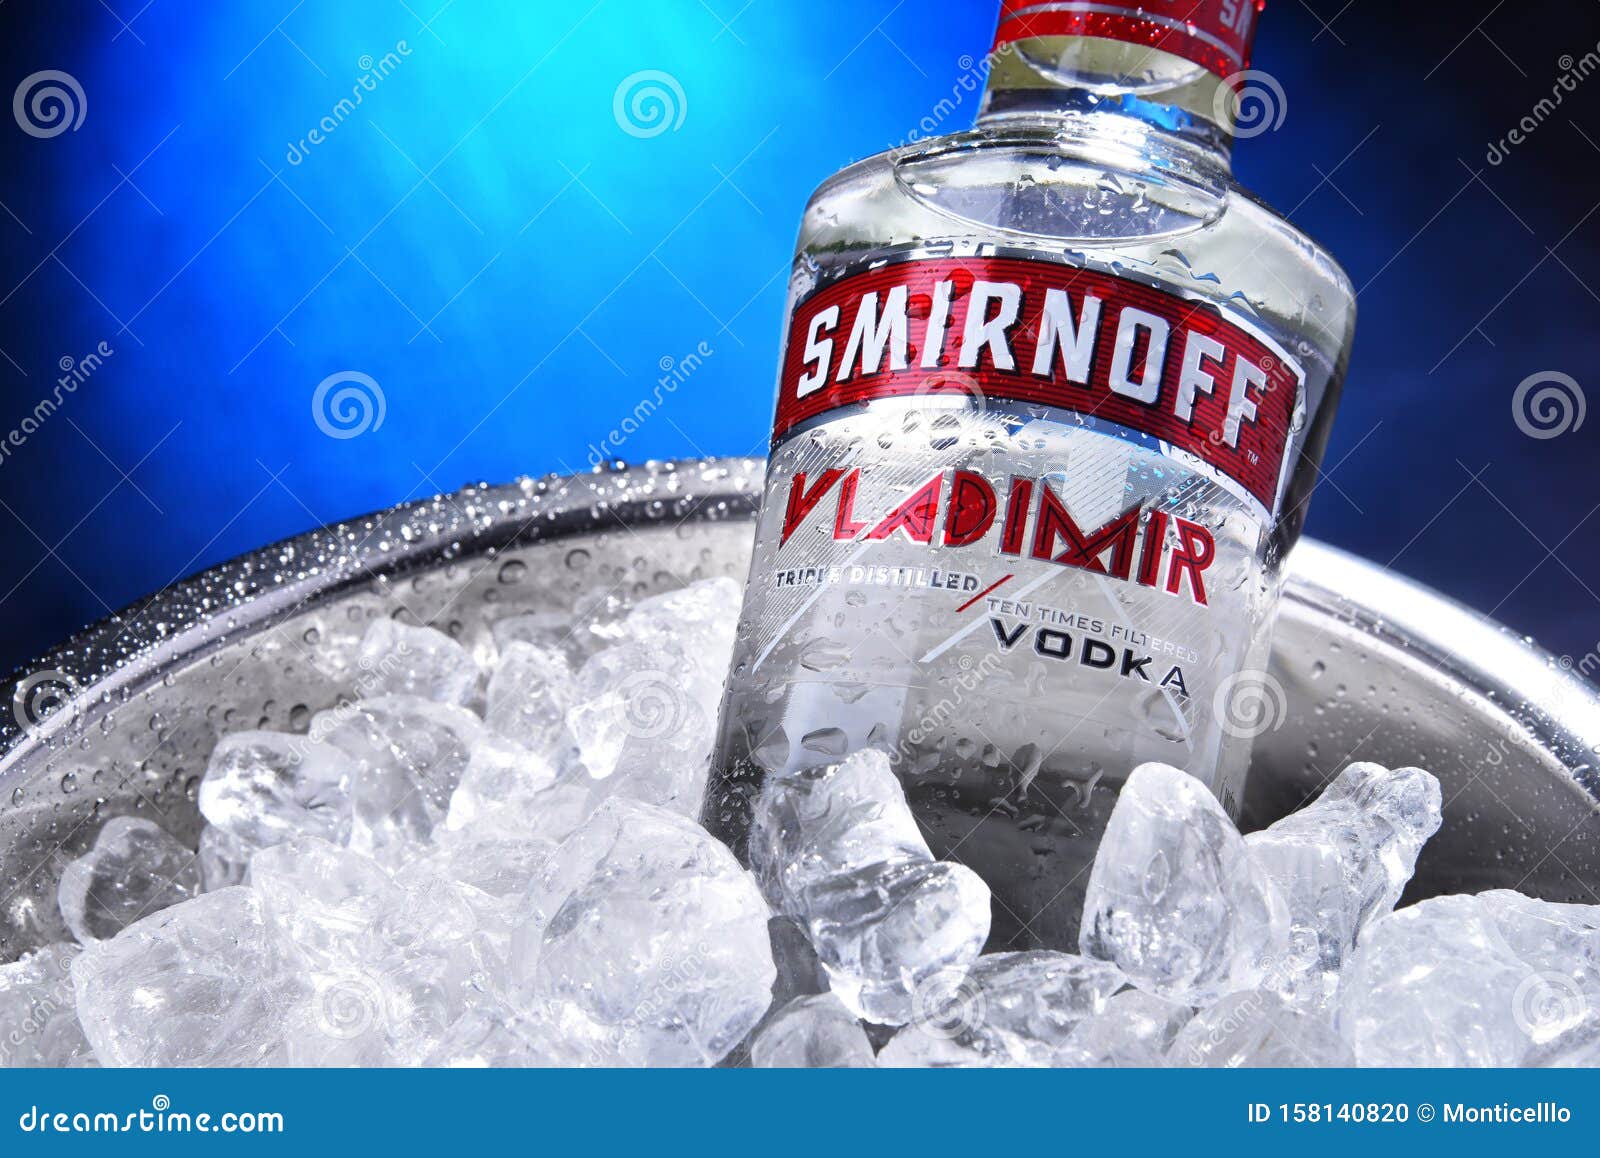 smirnoff vodka ราคา 7 11 12